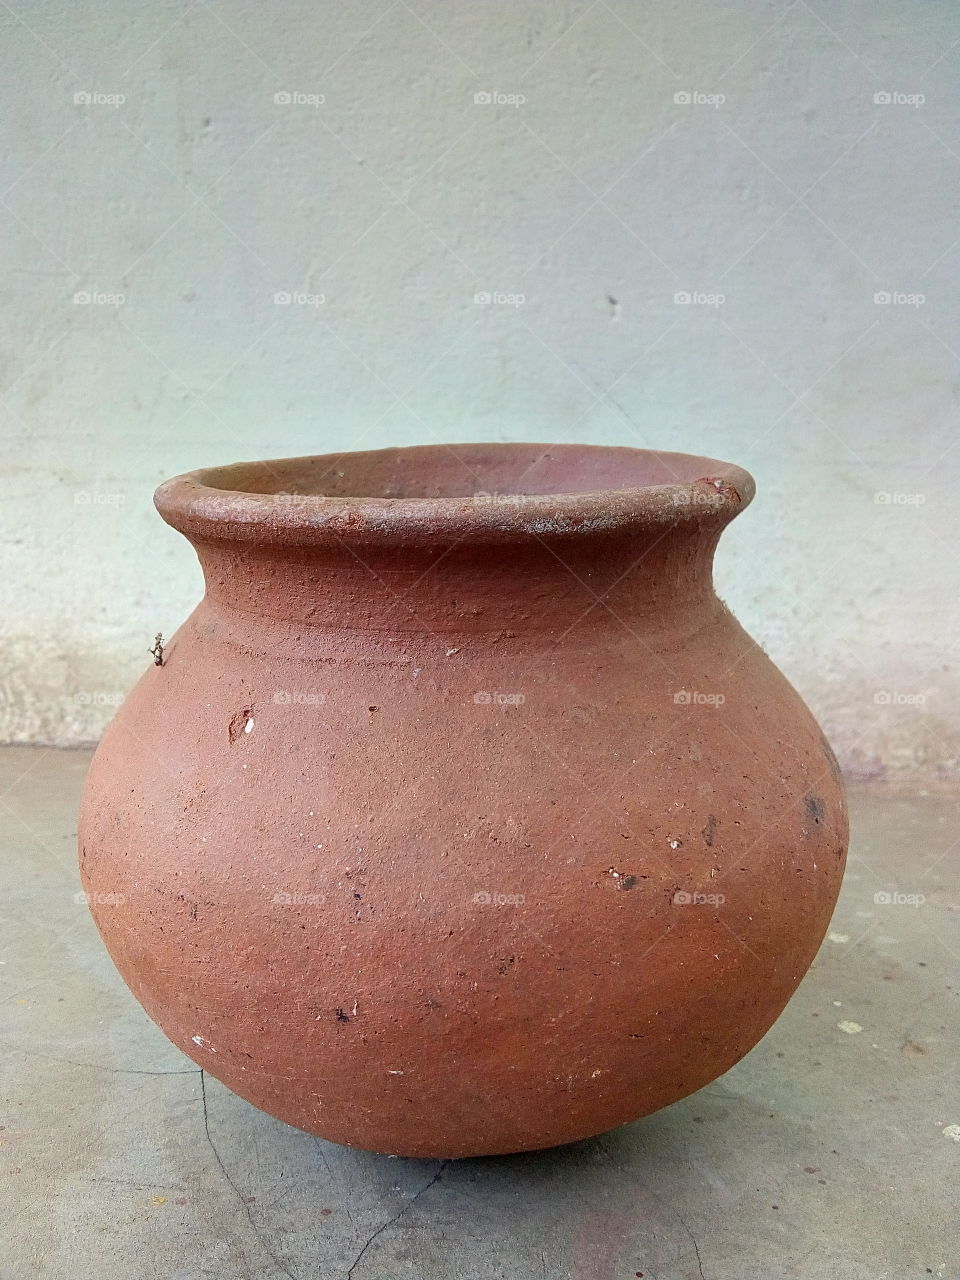 the dry mud pot